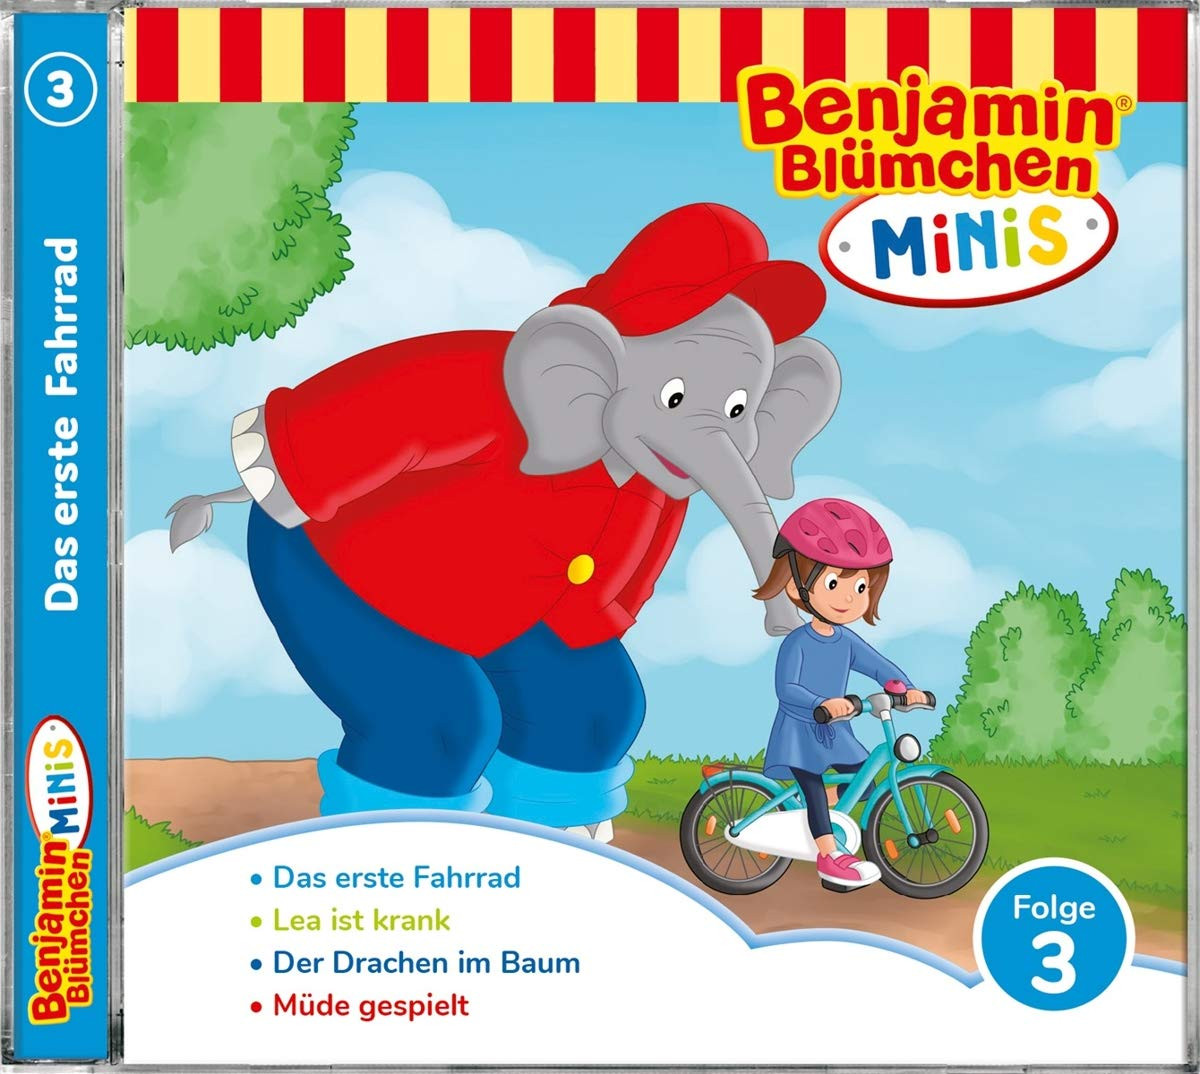 Benjamin Blümchen Minis - Folge 3: Das erste Fahrrad